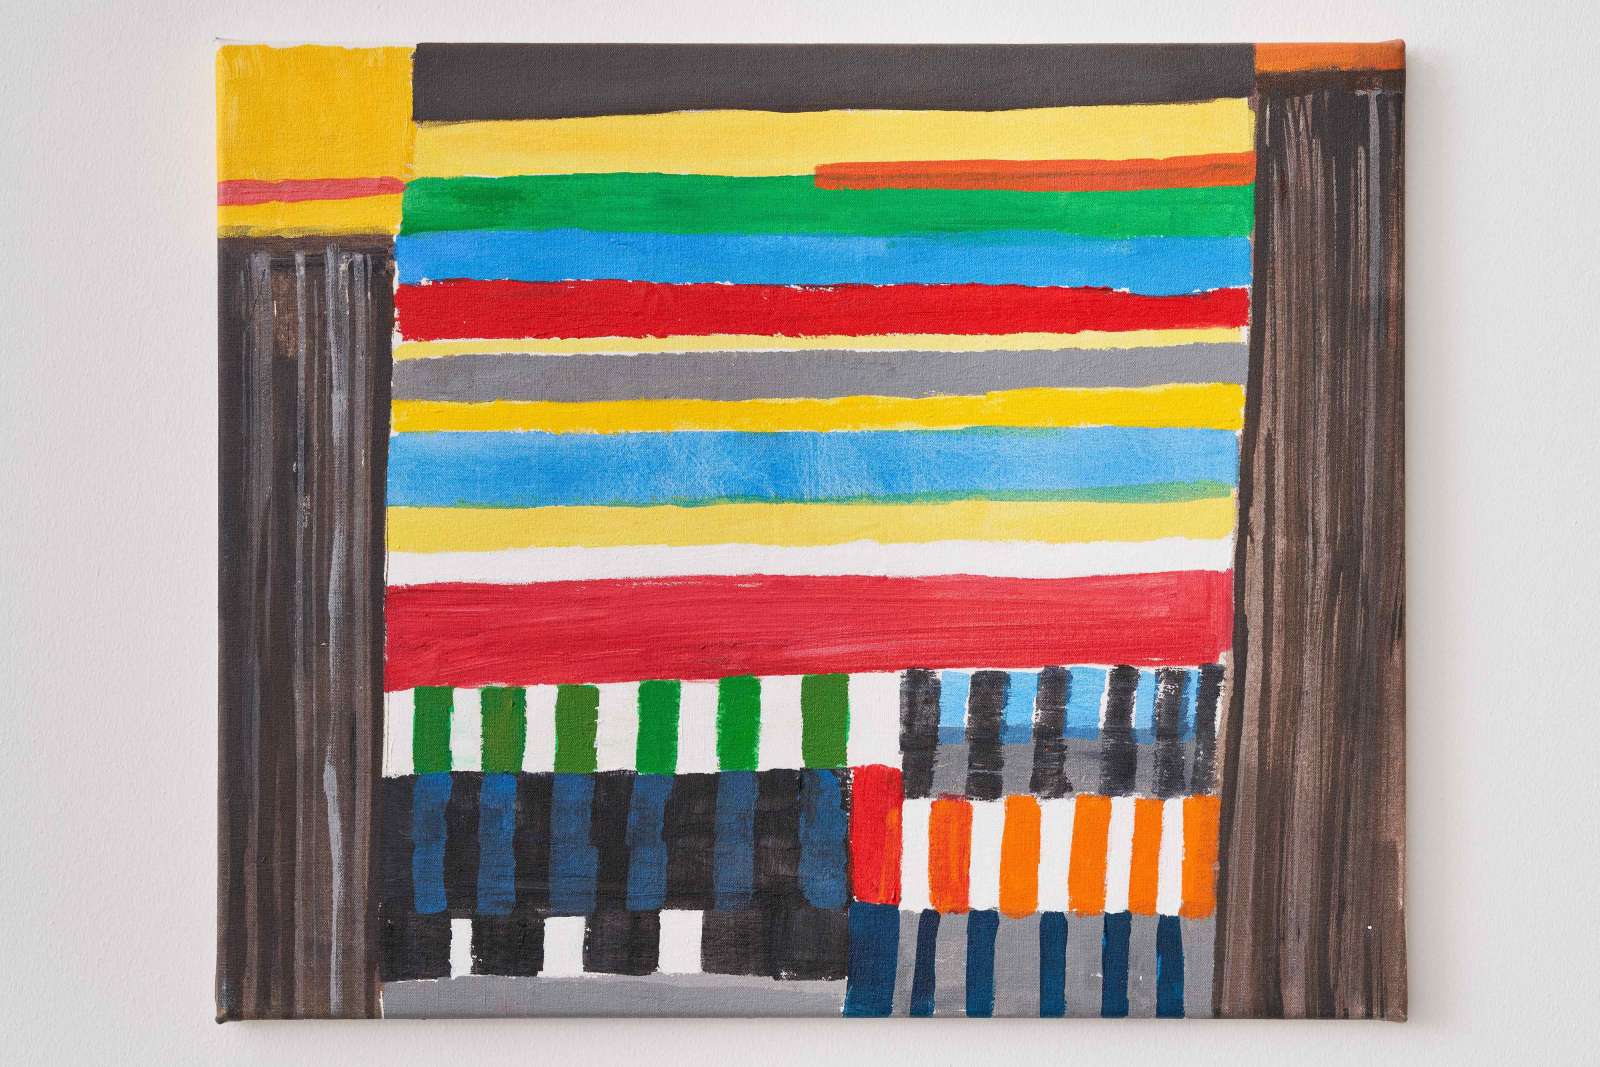 Atta Kwami, 'Susuka 2', 2010. Acrylic on canvas, 55.5 x 67 cm.